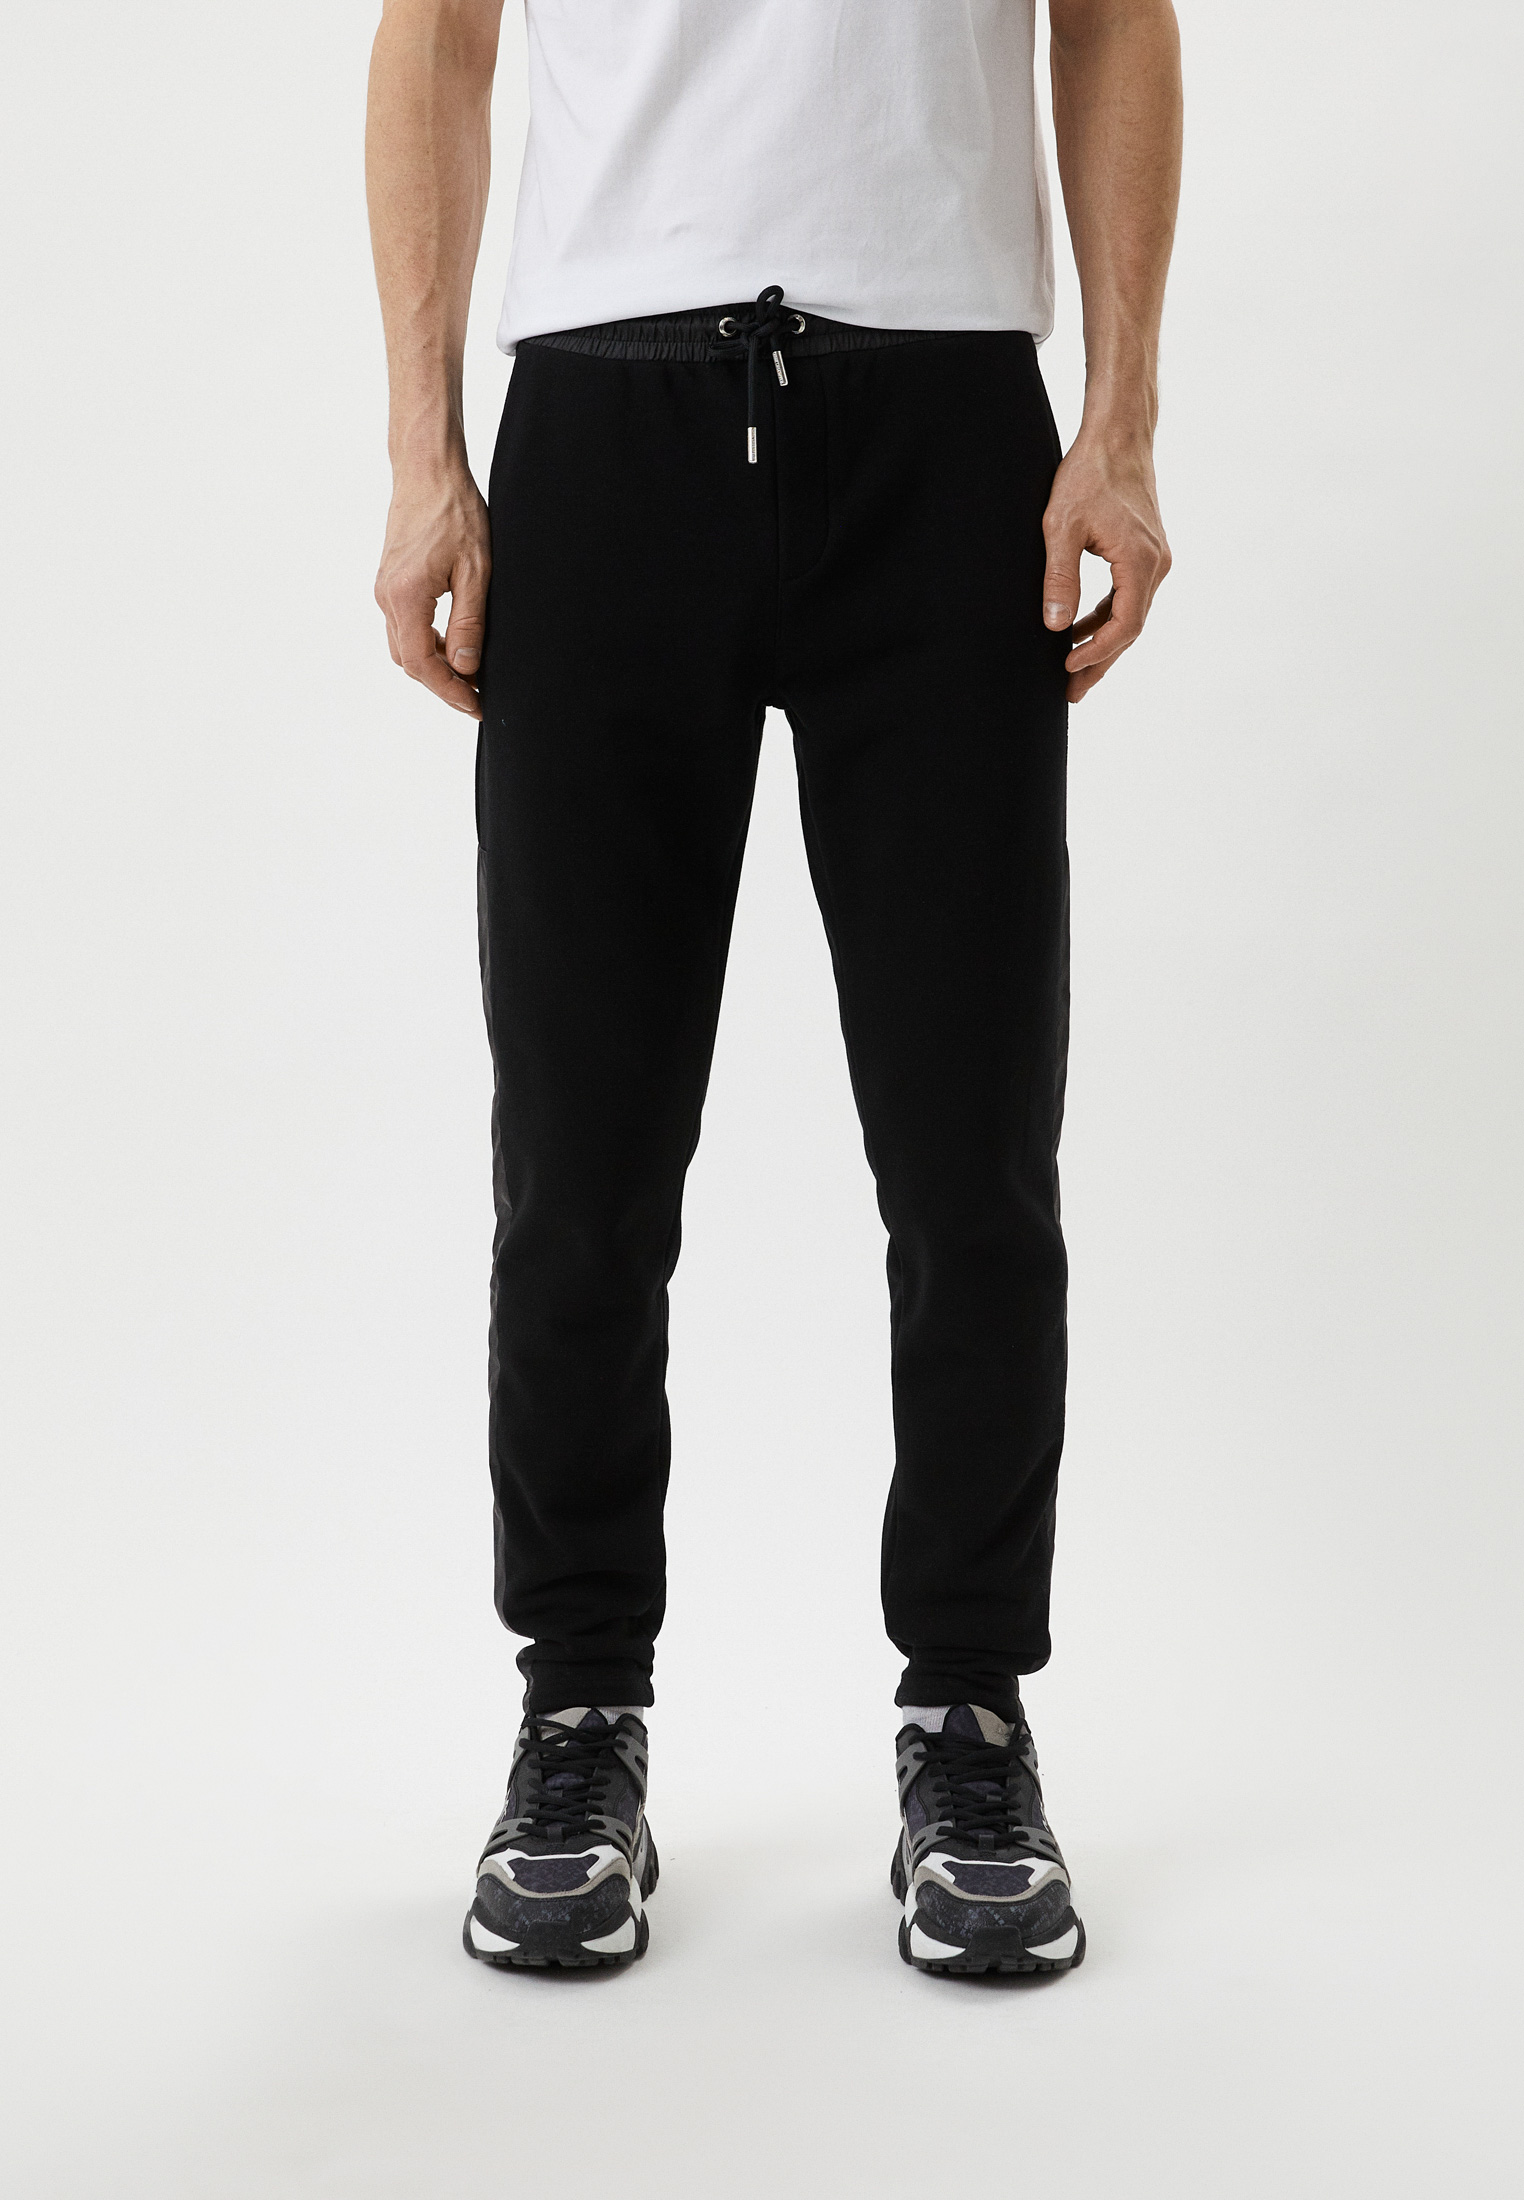 Мужские спортивные брюки Karl Lagerfeld (Карл Лагерфельд) 705084-531900